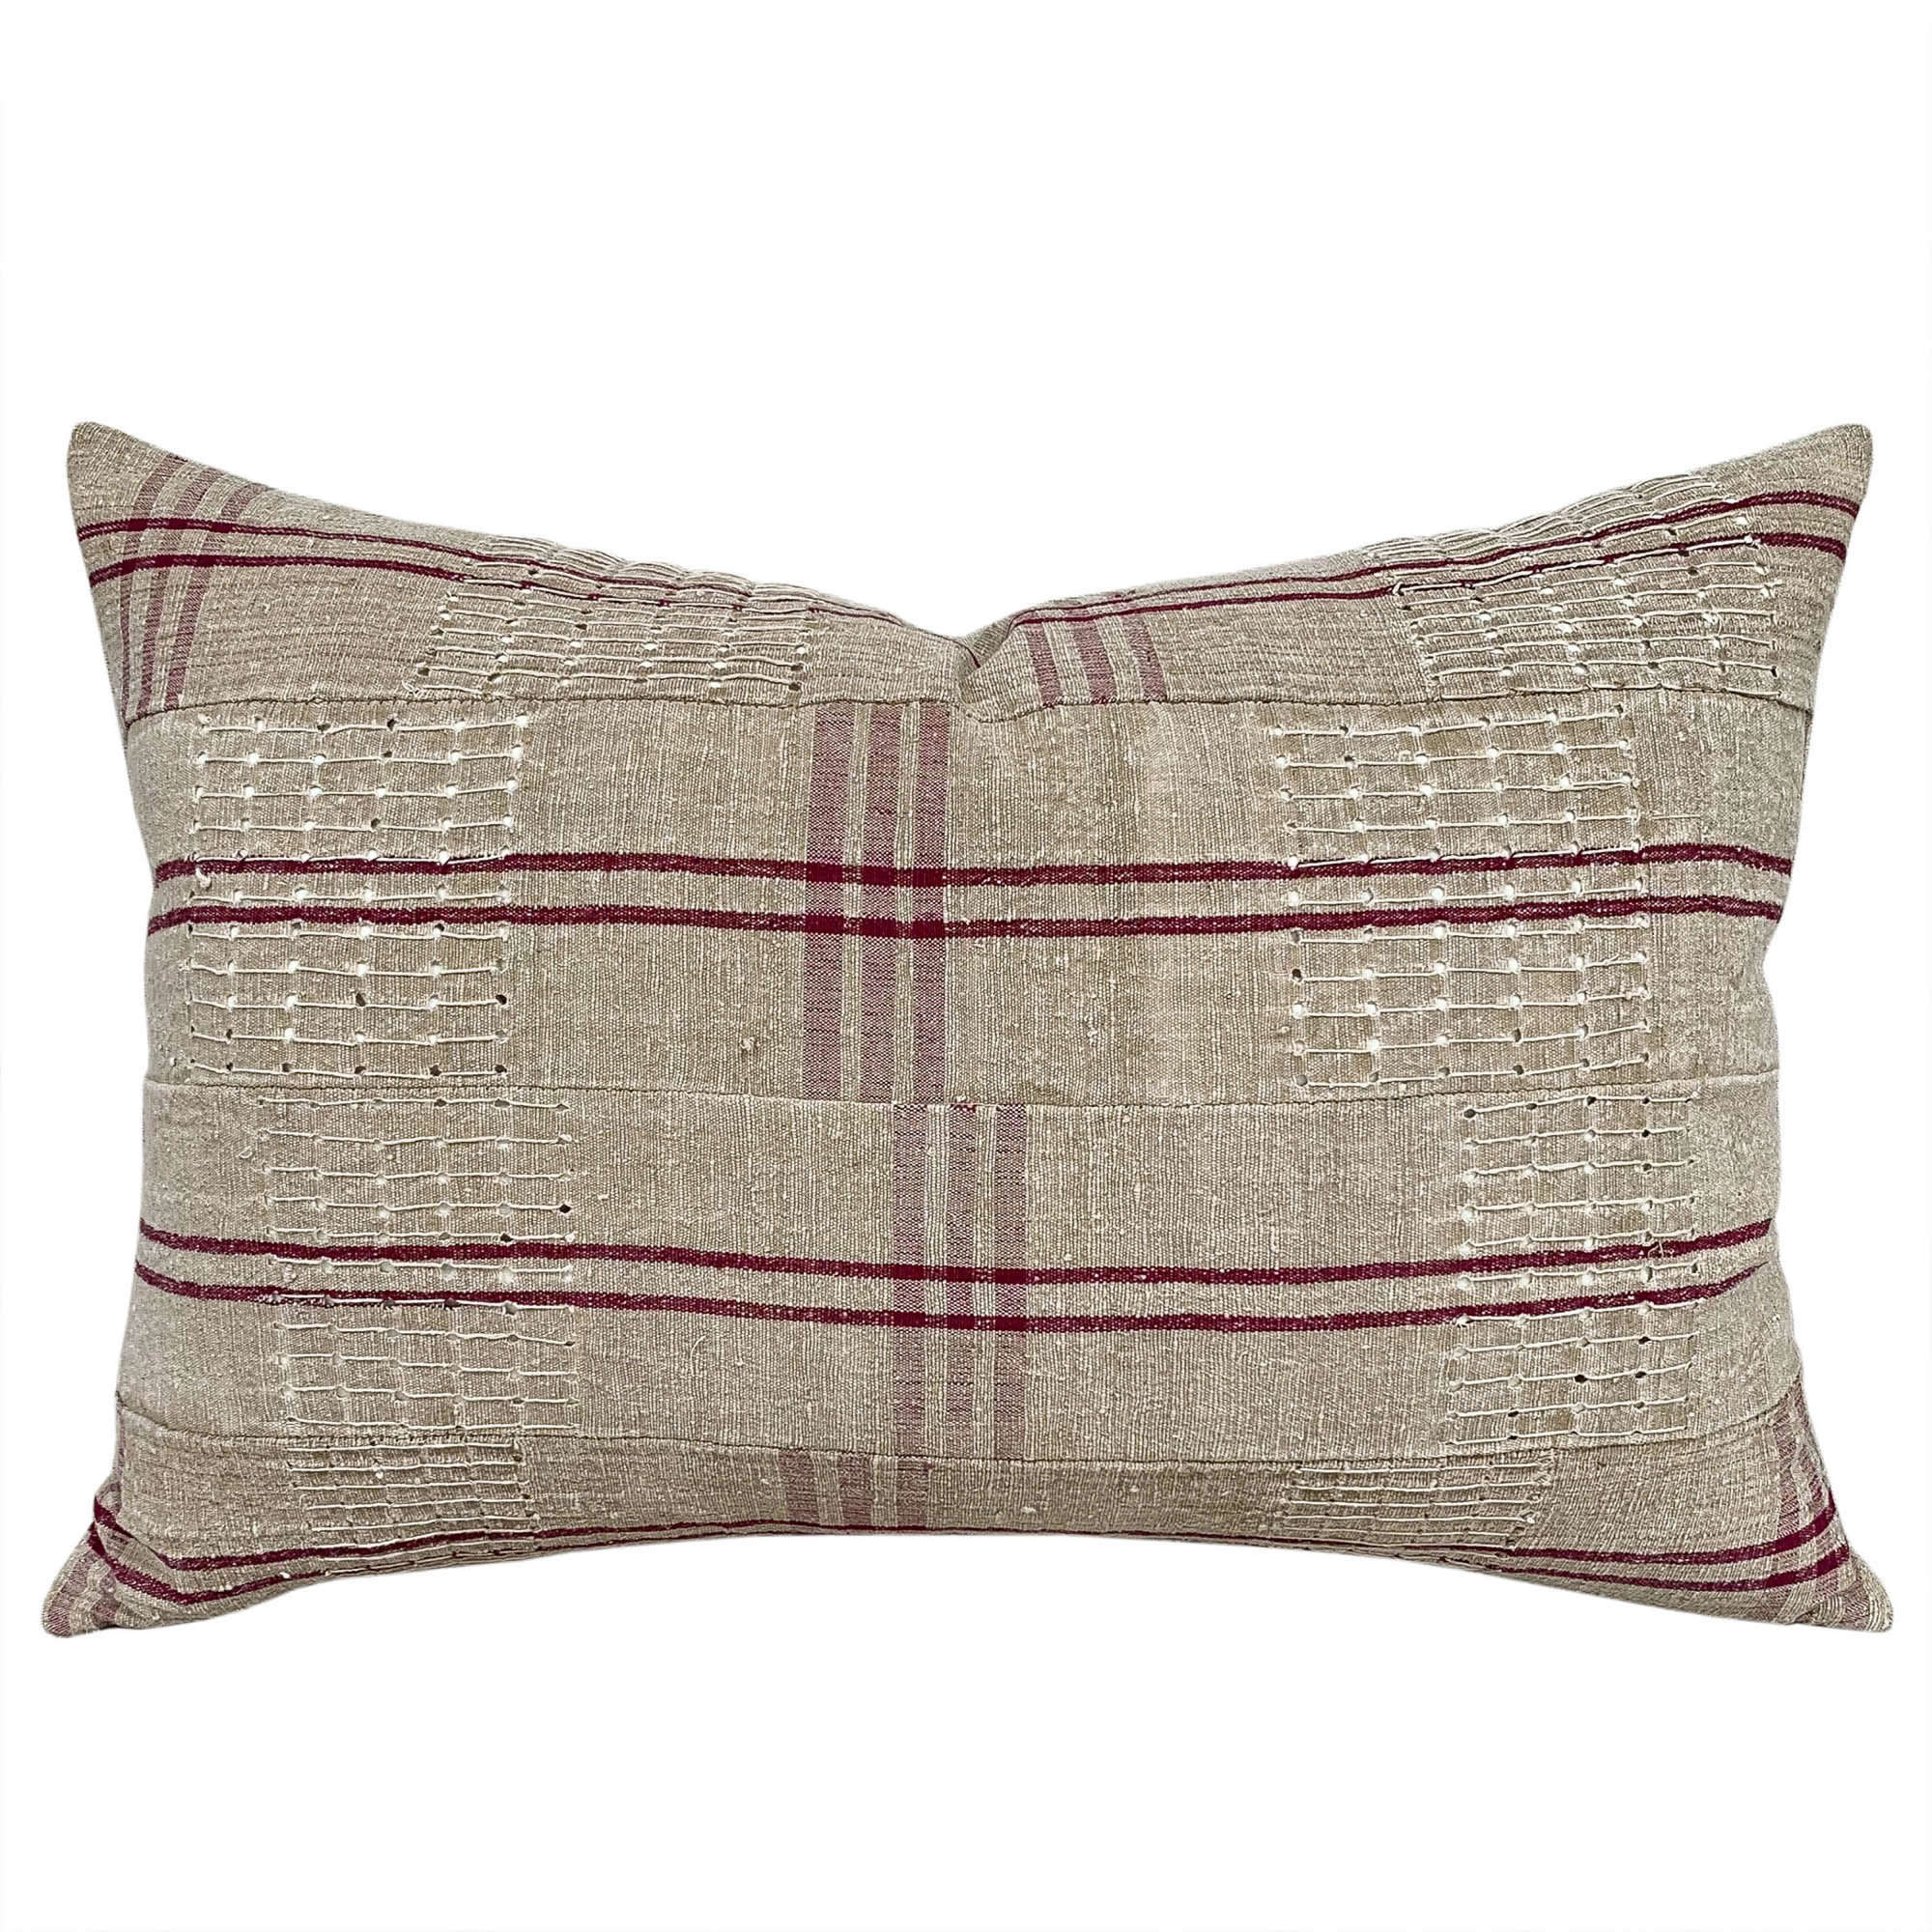 Yoruba cushion with berry stripe